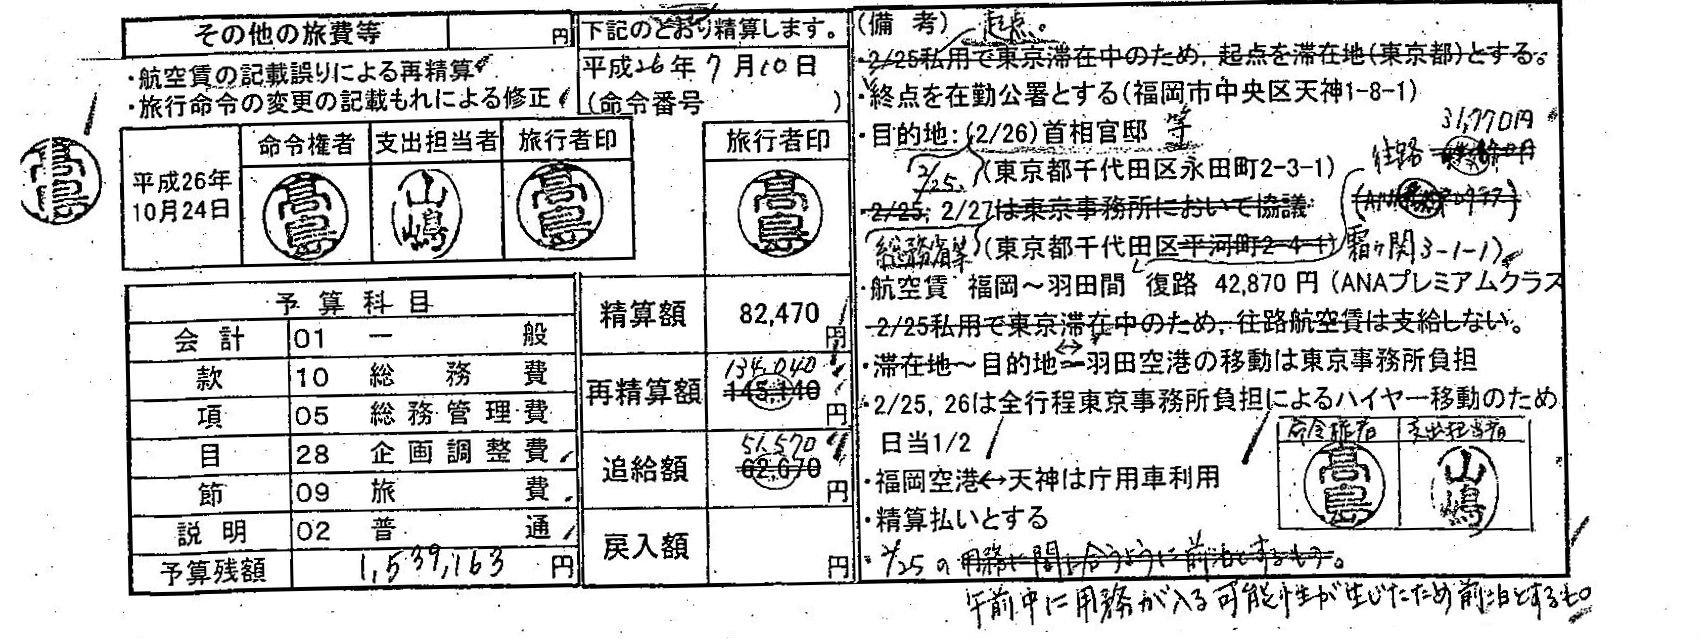 http://hunter-investigate.jp/news/2015/02/04/%E5%91%BD%E4%BB%A4%E6%9B%B8%E6%9C%80%E6%96%B0.jpg